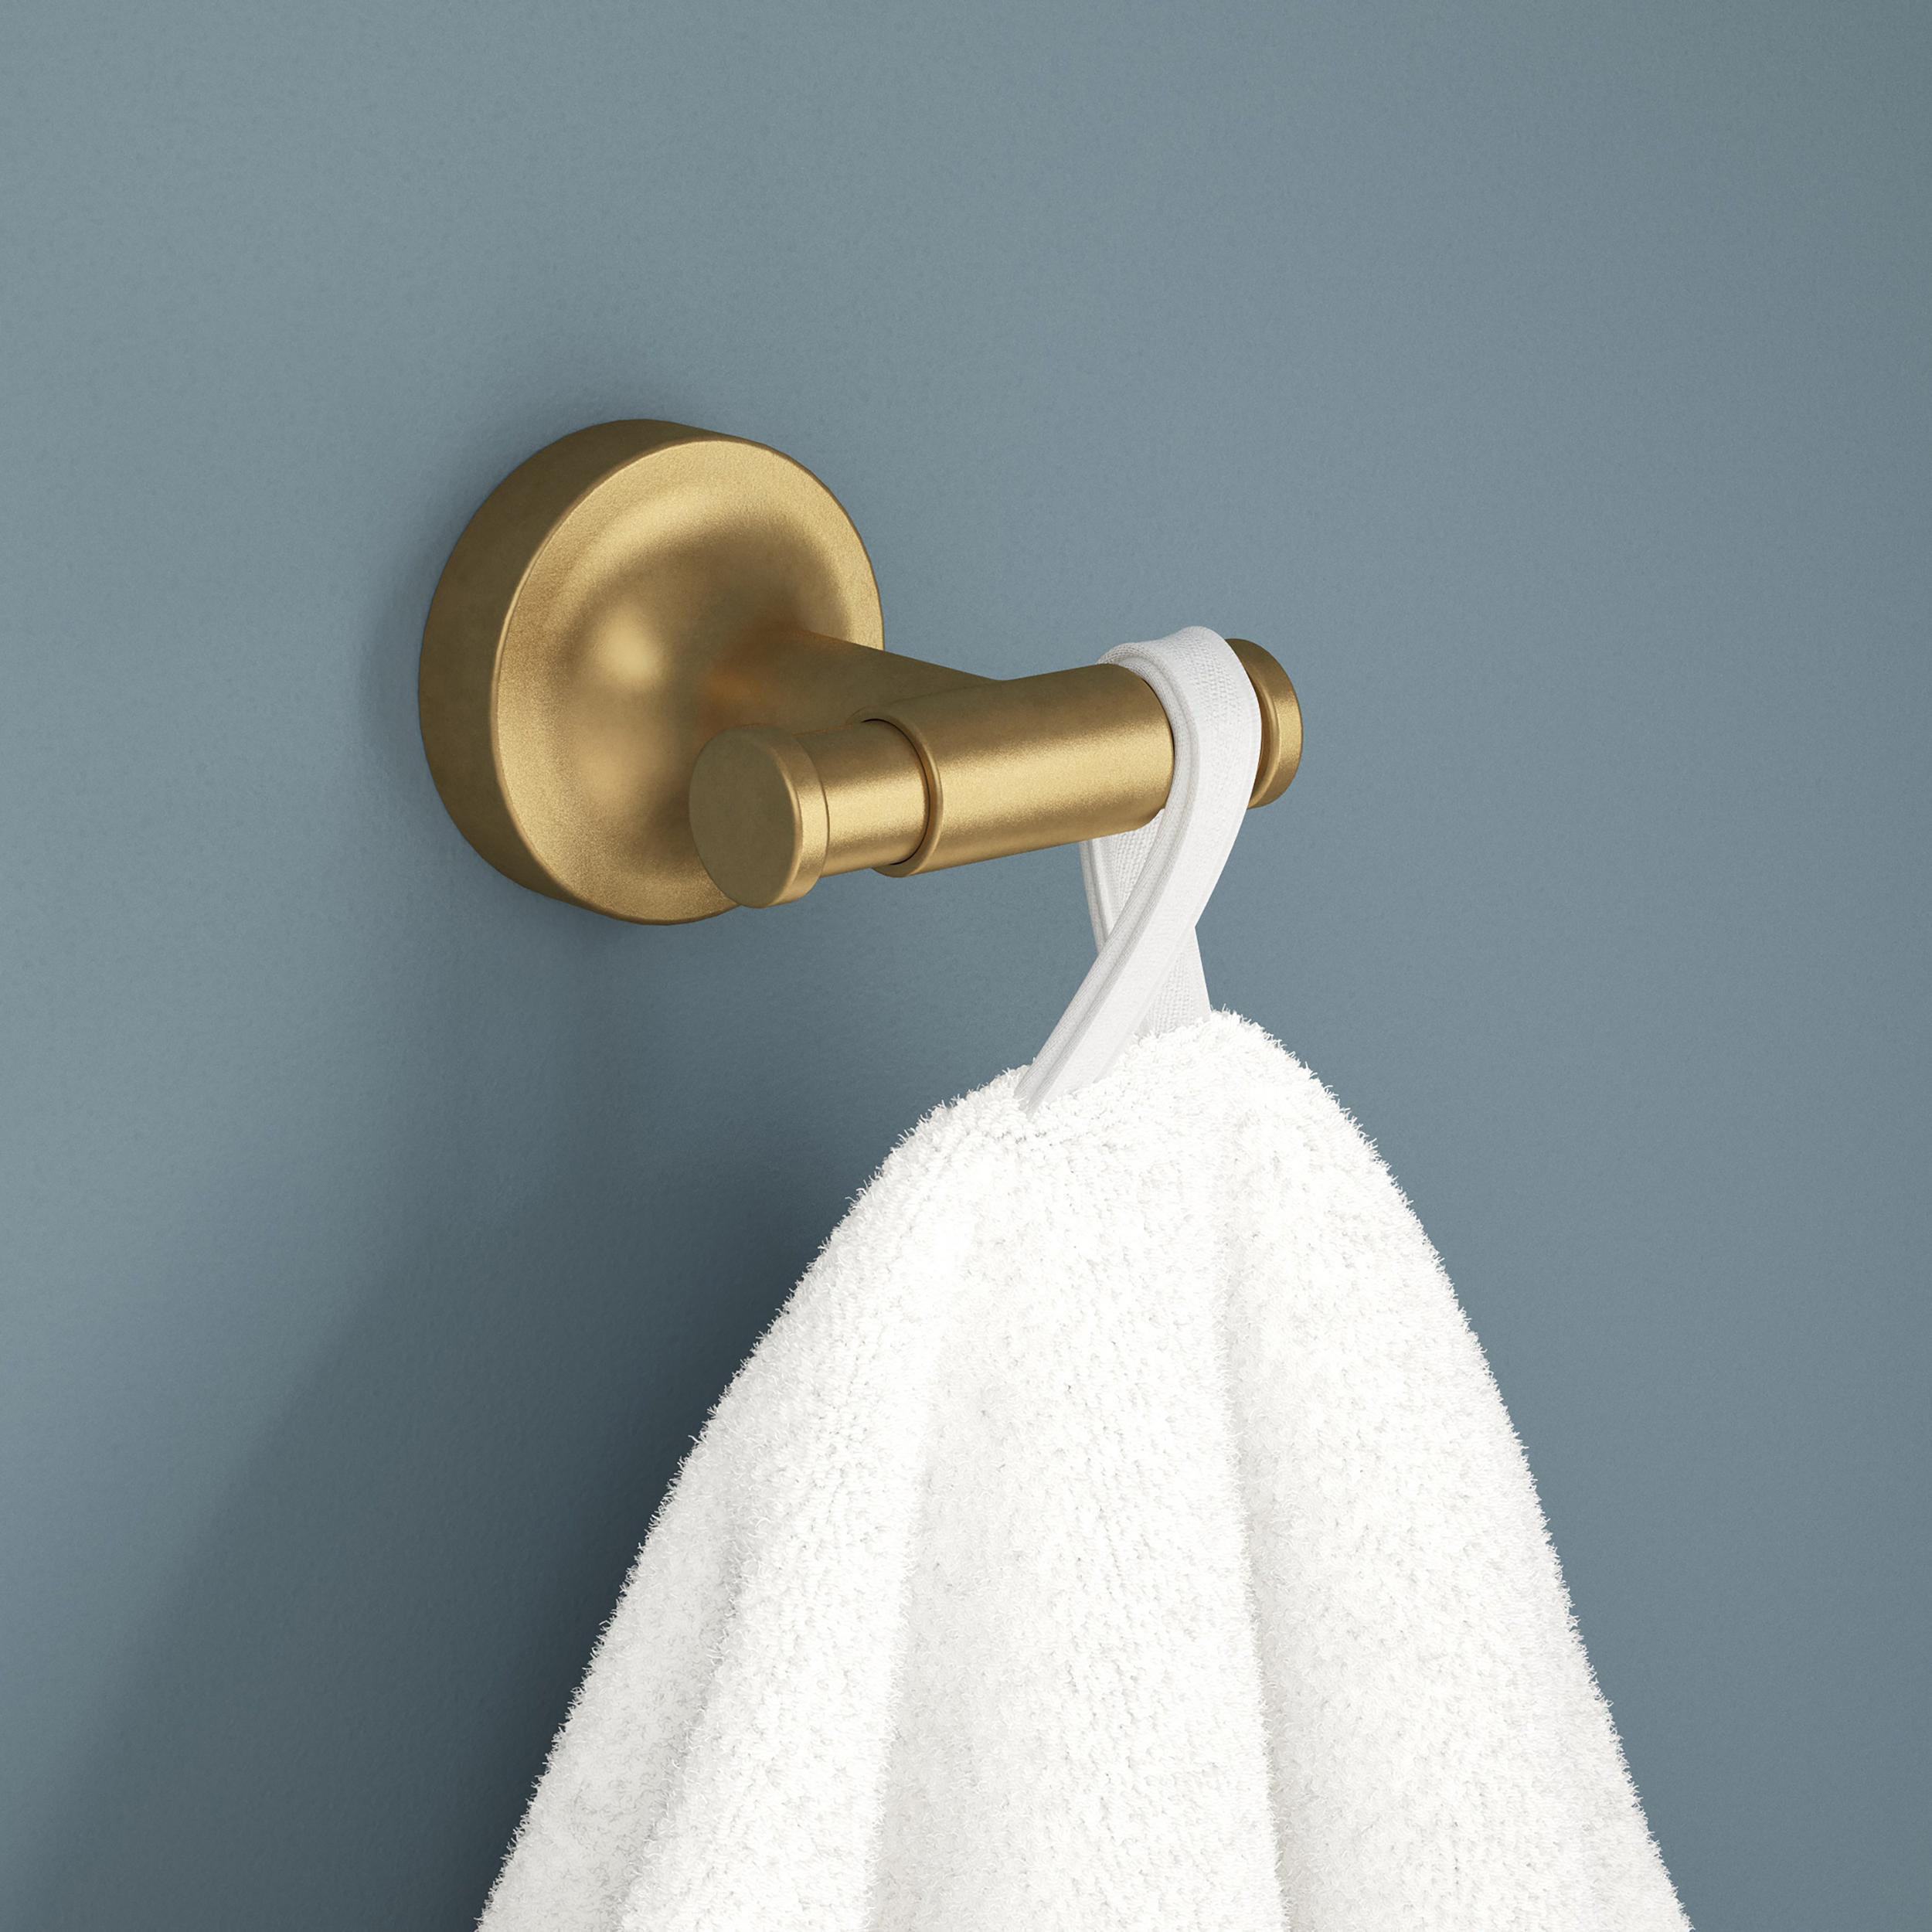 Franklin Brass Voisin Double Towel Hook Bath Hardware Accessory